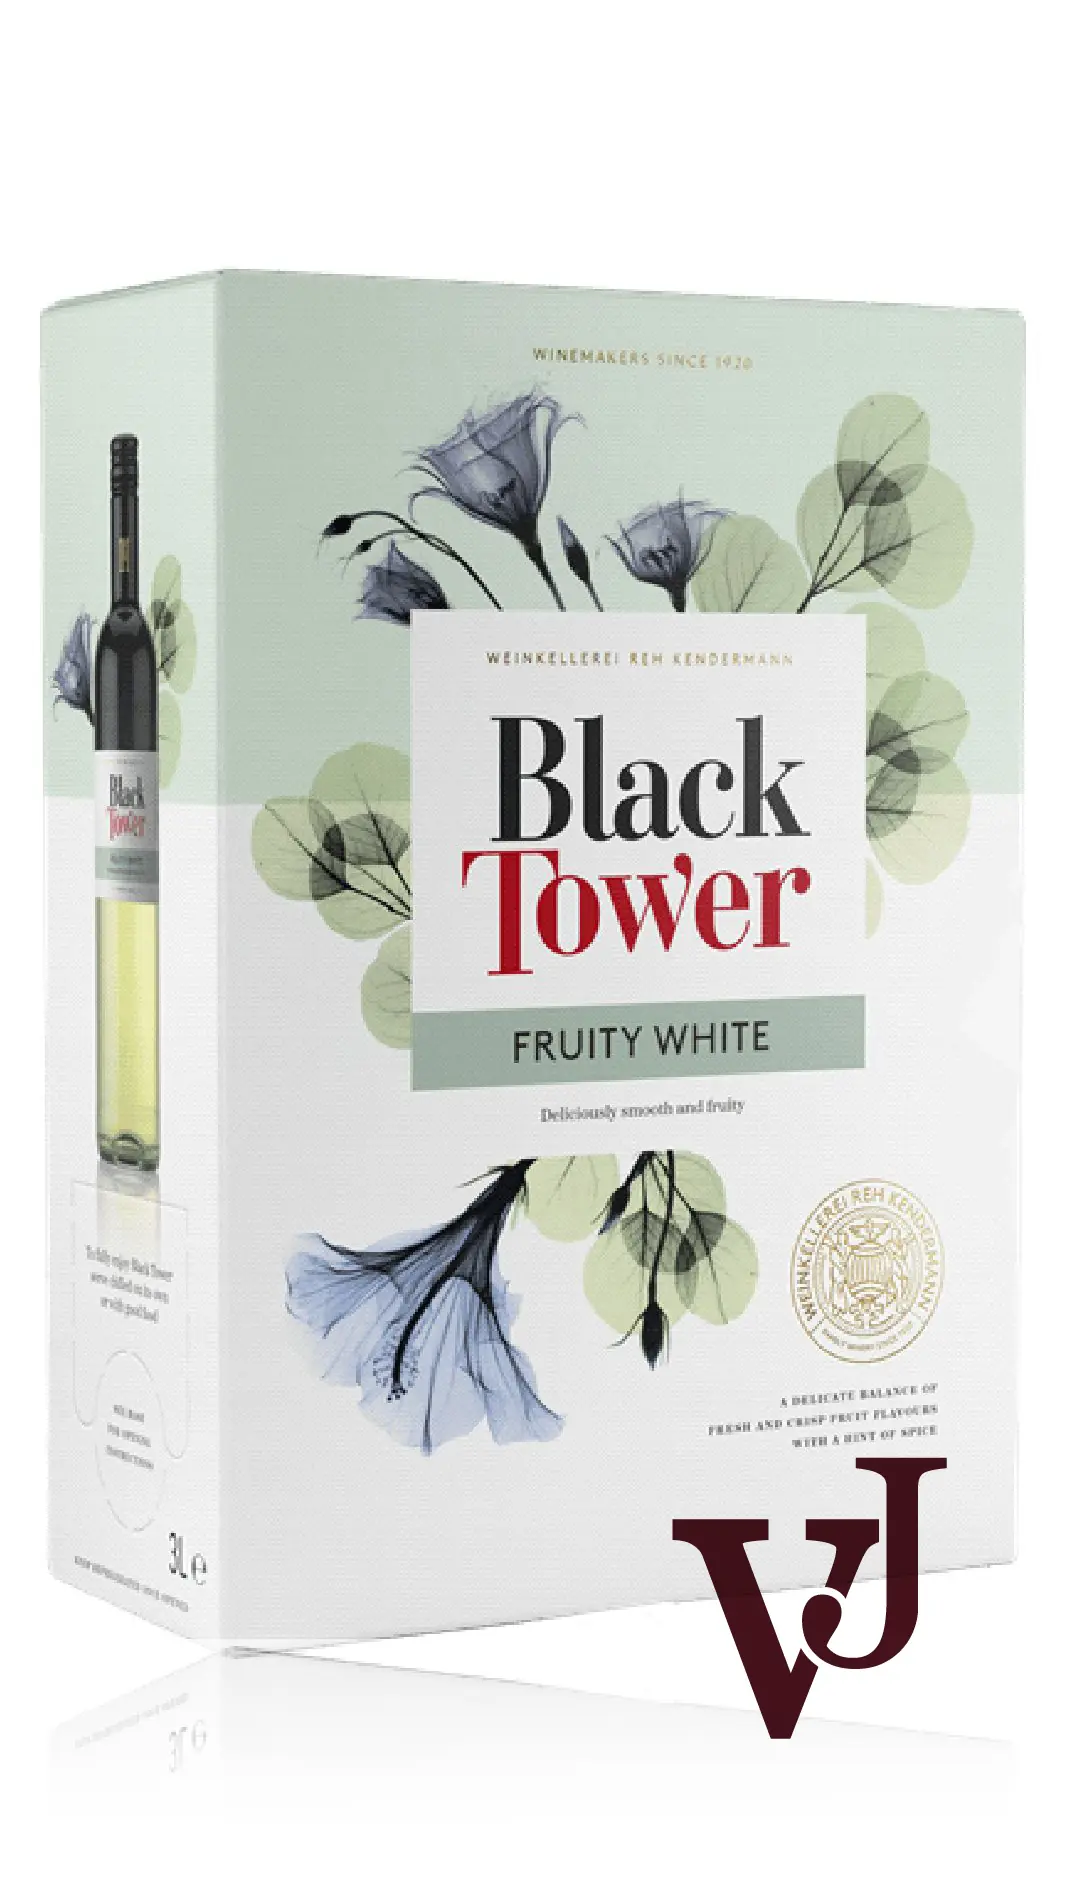 Vitt Vin - Black Tower Fruity White artikel nummer 604508 från producenten Reh Kendermann från området Rheinhessen beläget i Tyskland. - Vinjournalen.se